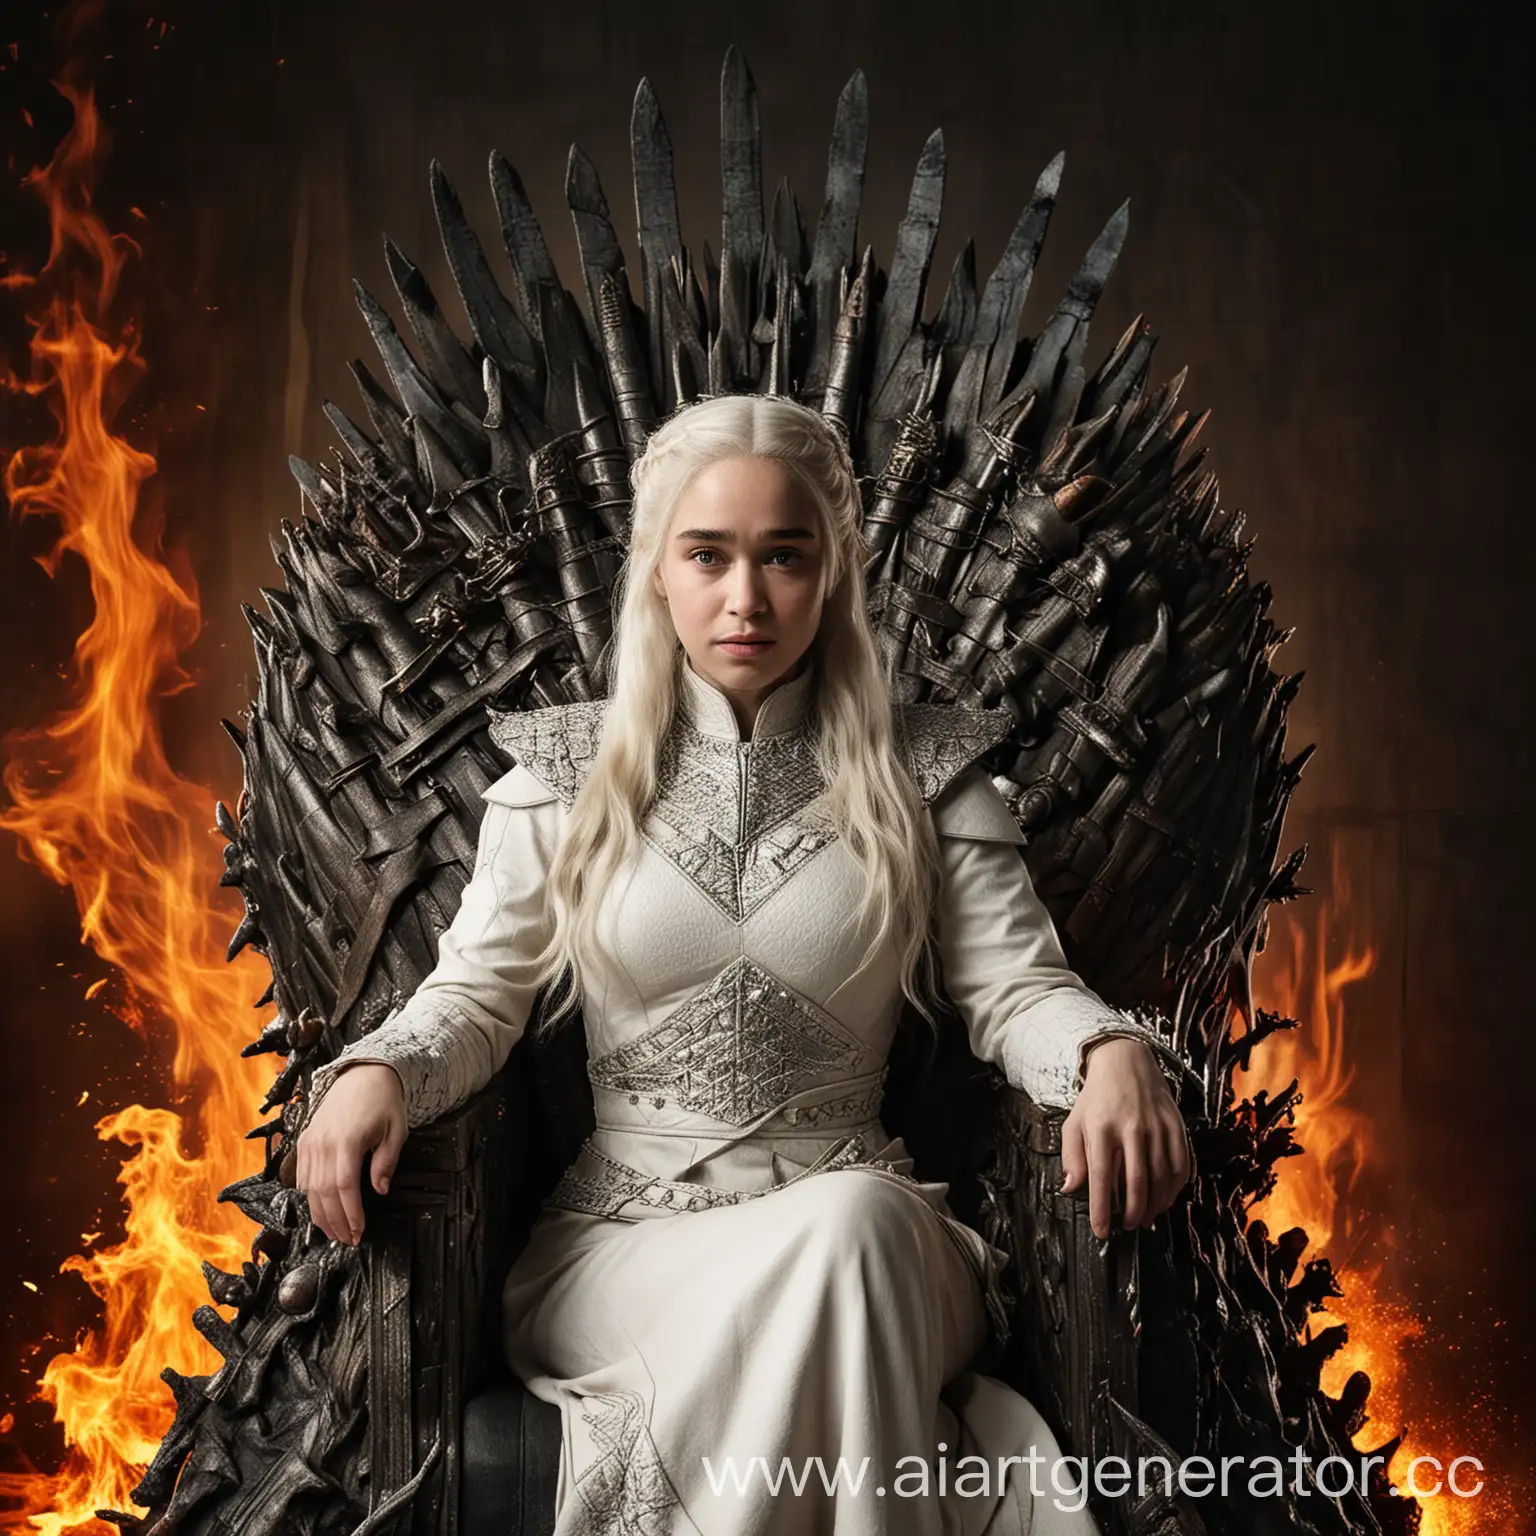 Daenerys-Targaryen-Emilia-Clarke-on-Iron-Throne-with-Dragon-Fire